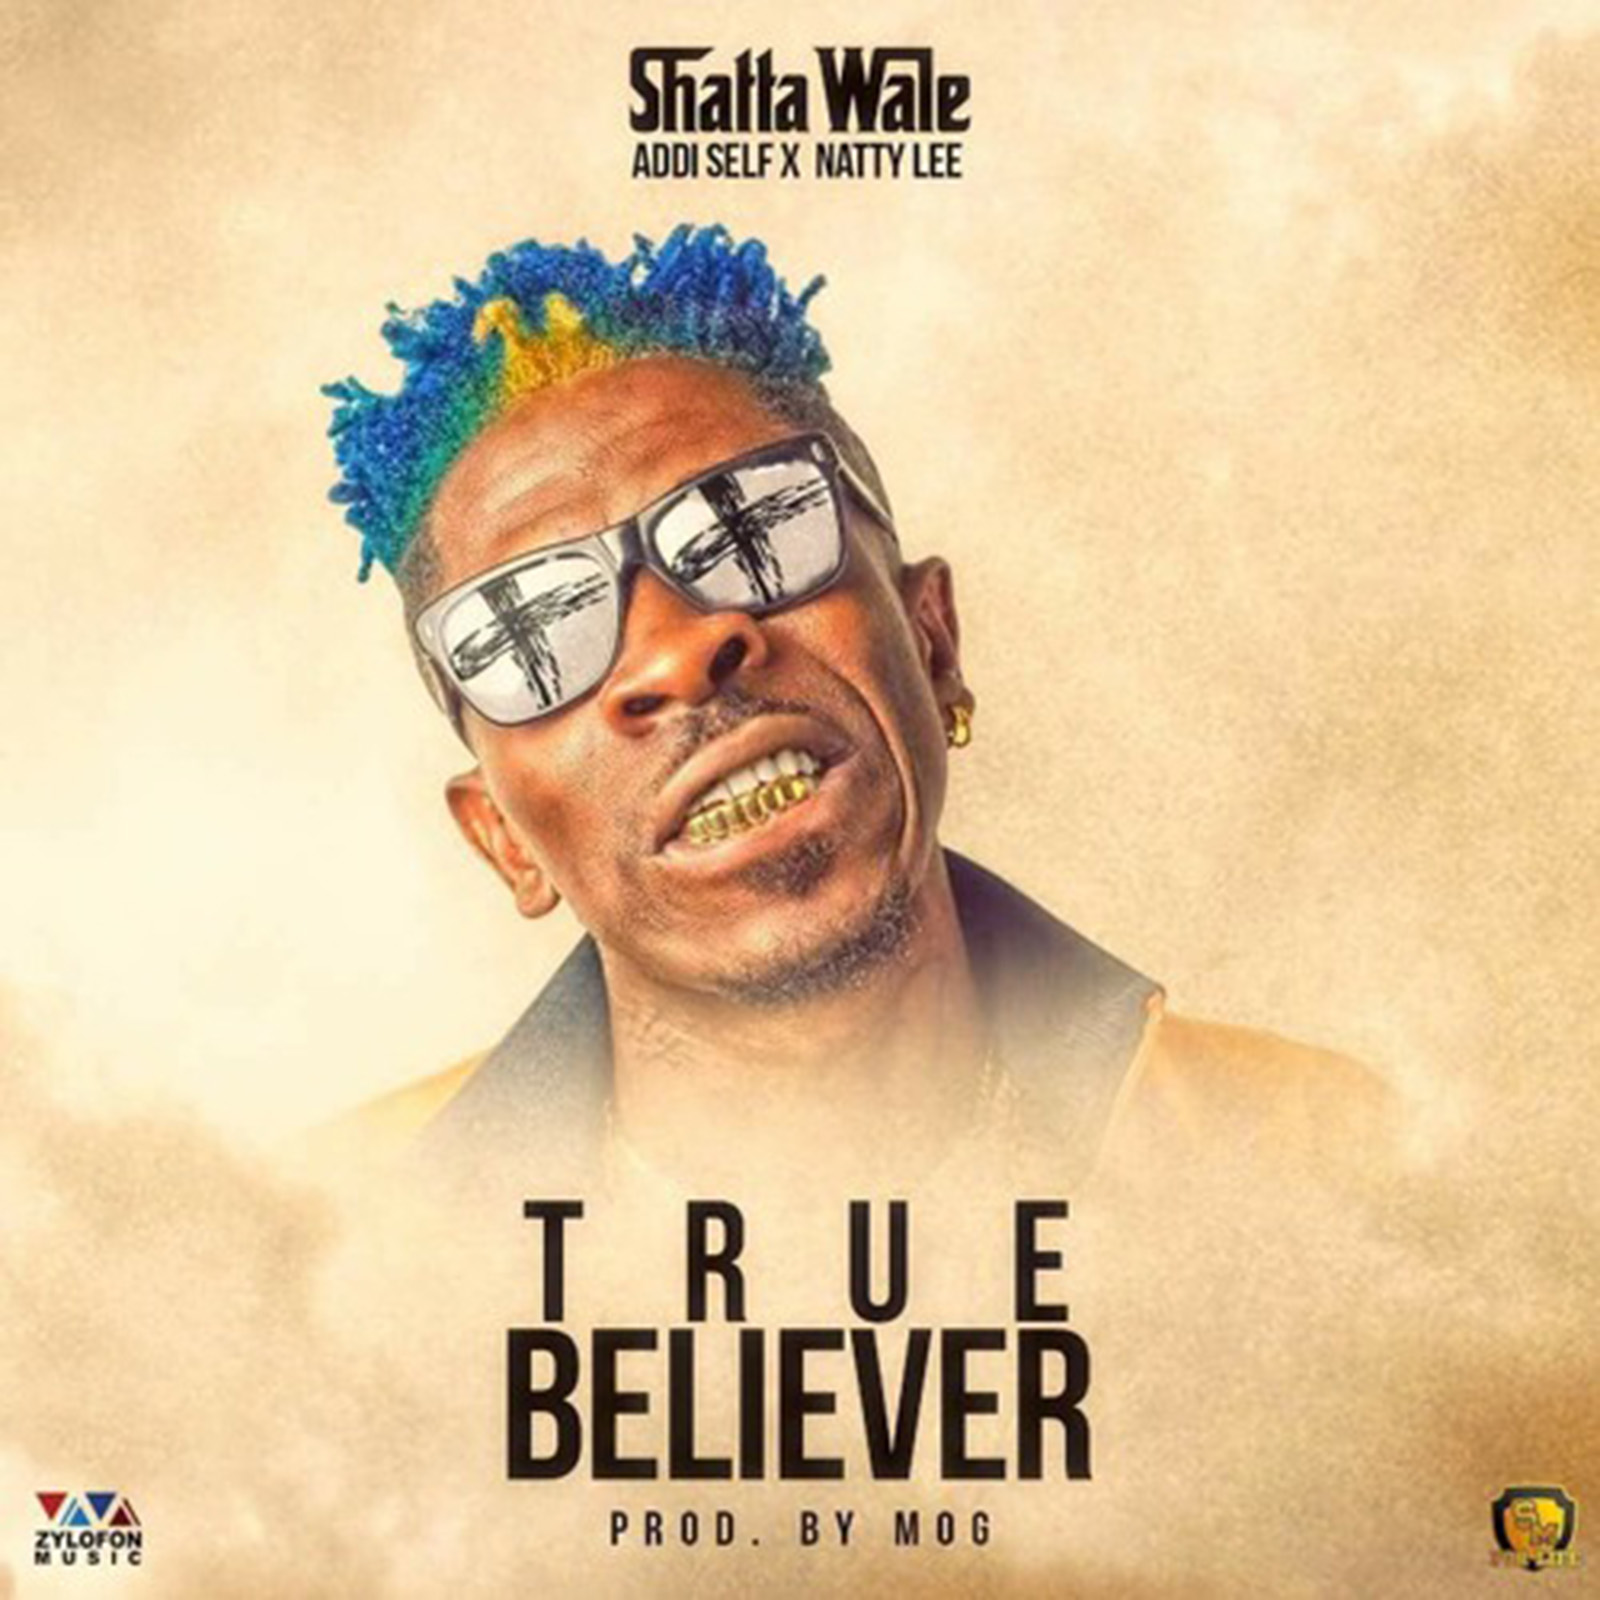 True Believer by Shatta Wale feat. Addi Self & Natty Lee